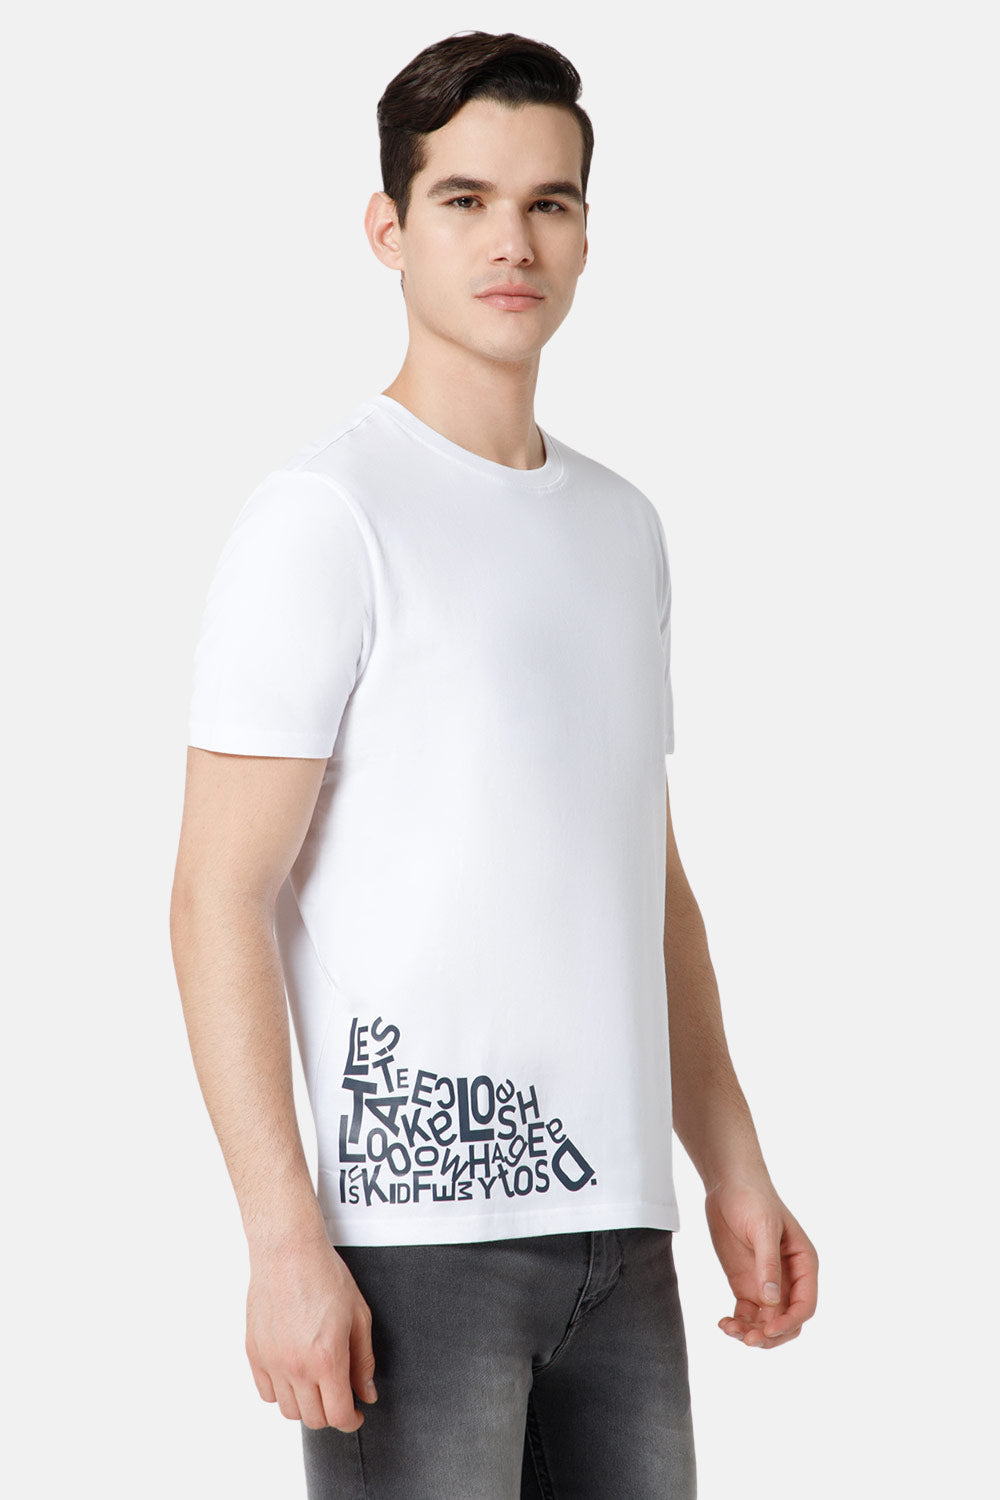 Enhance Printed Crew Neck Men's Casual T-Shirts - White - TS29